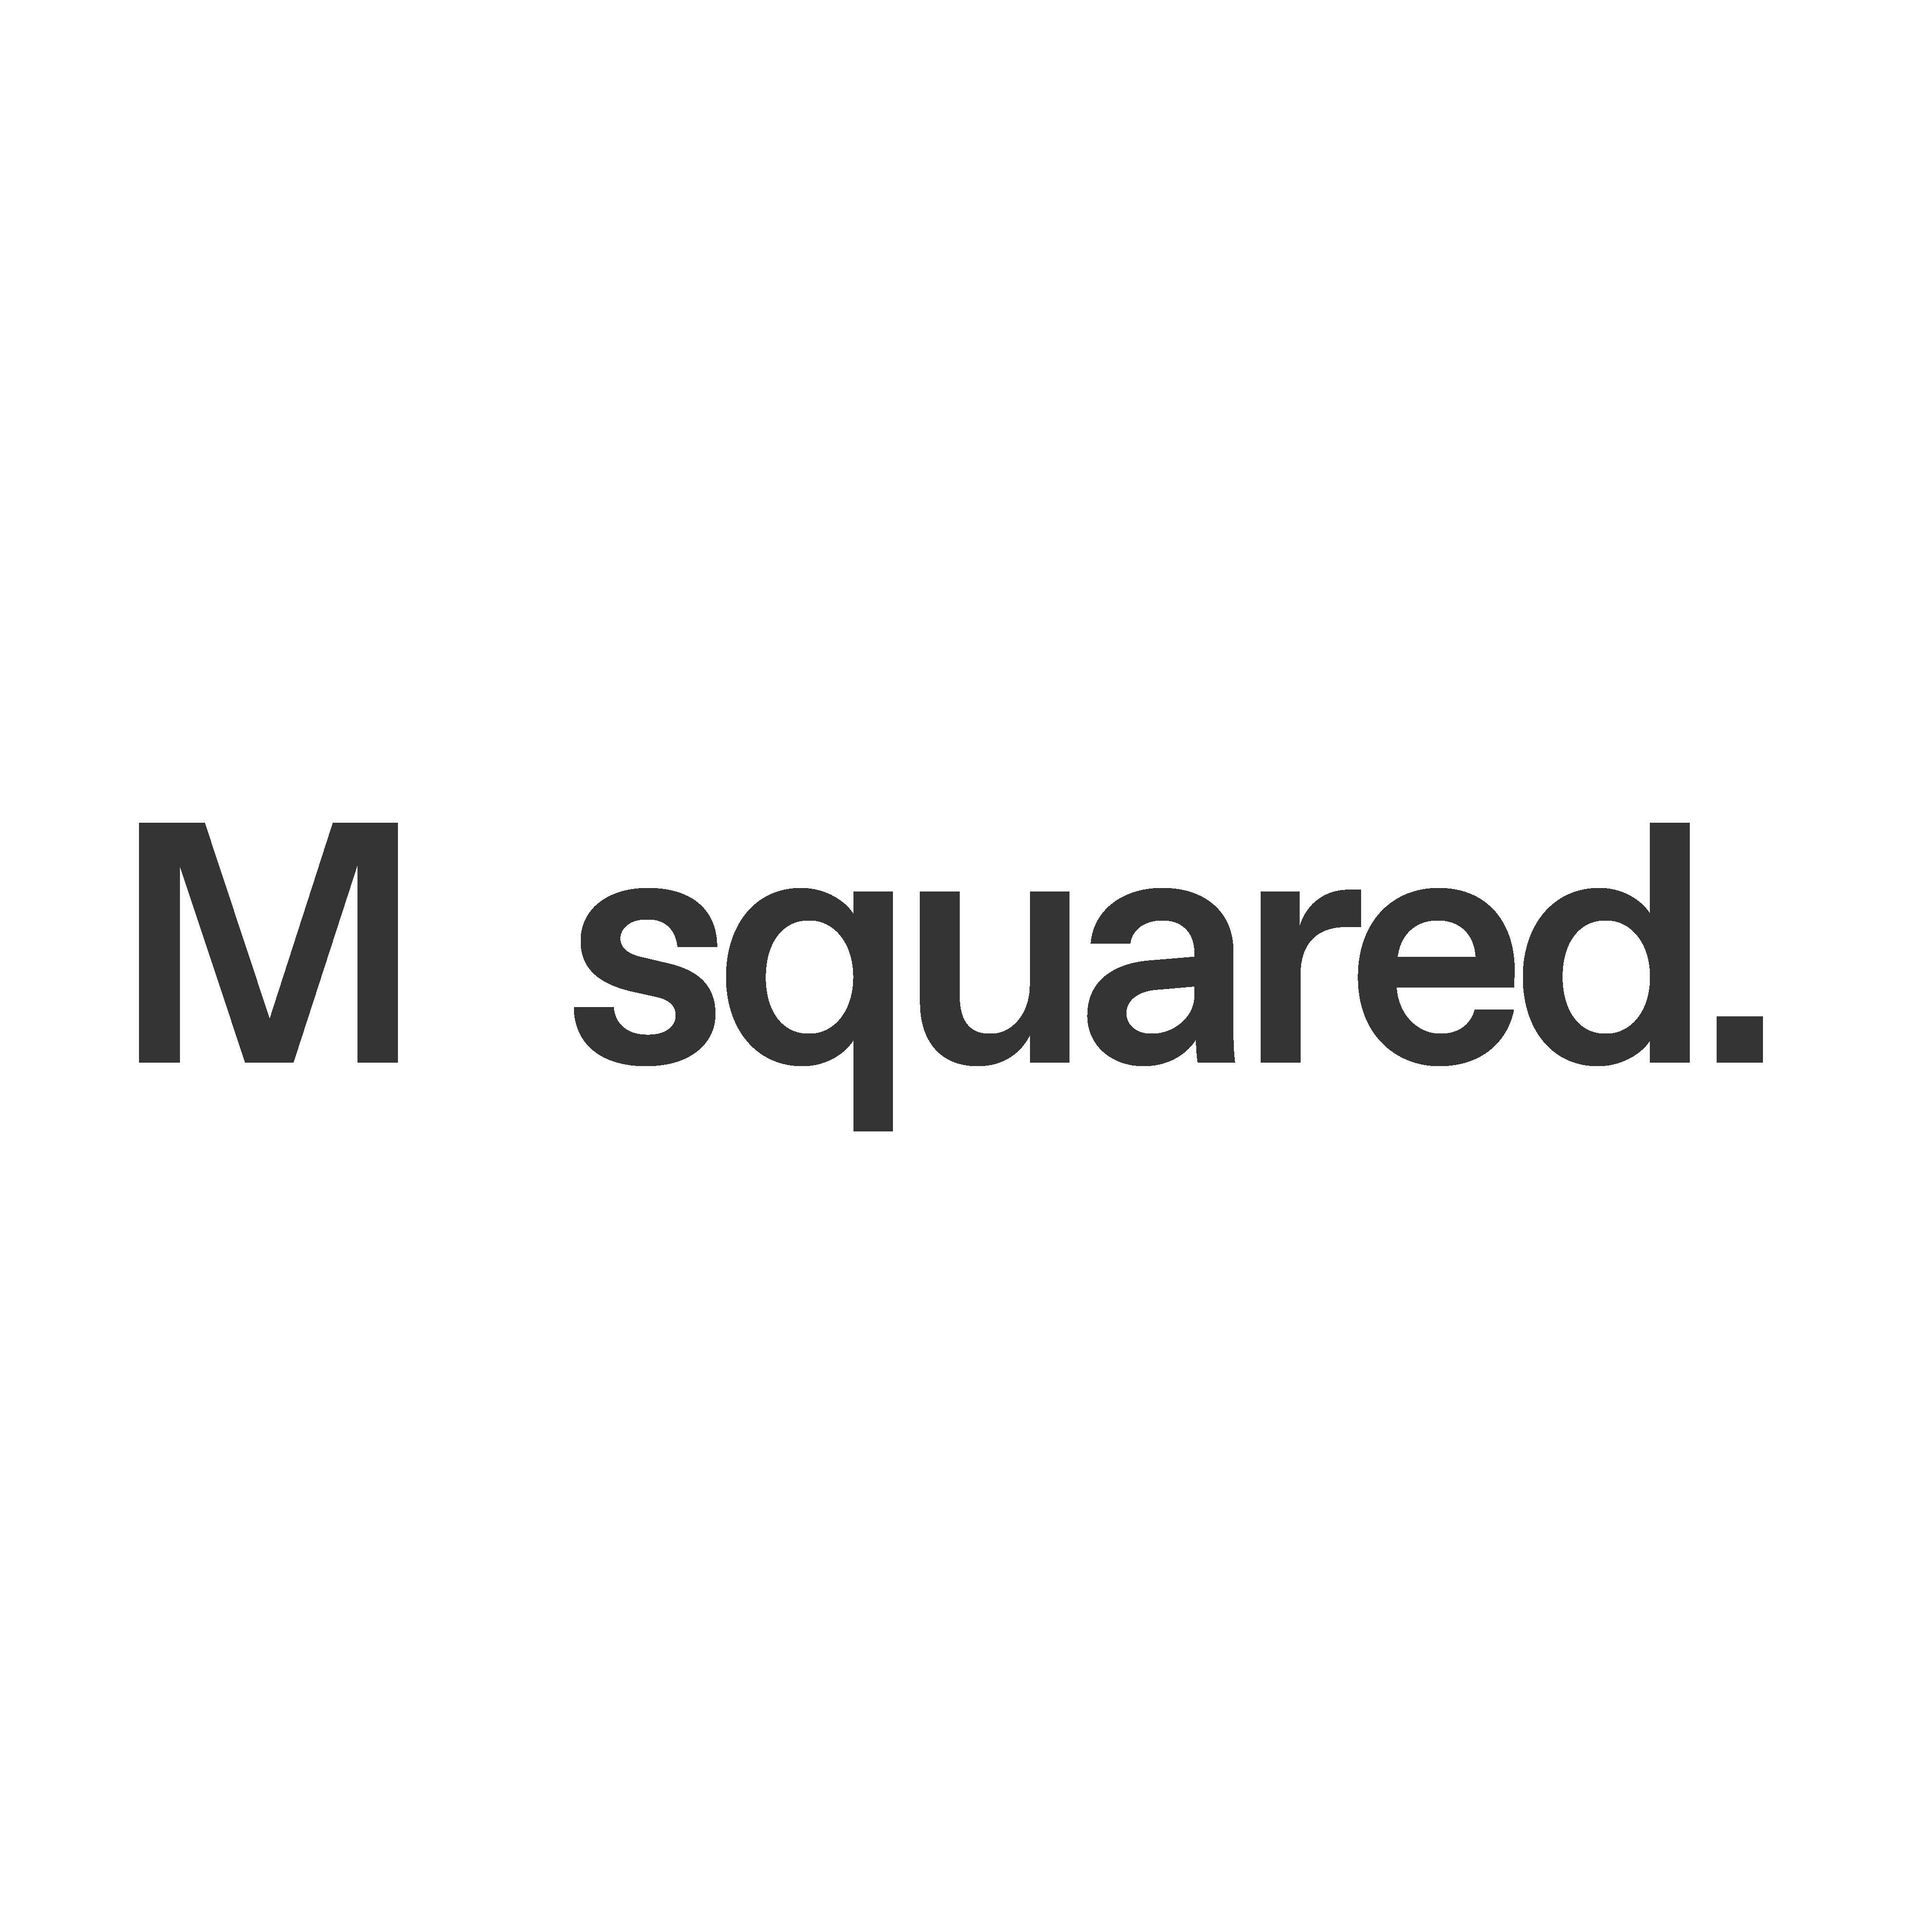 Developer: M Squared